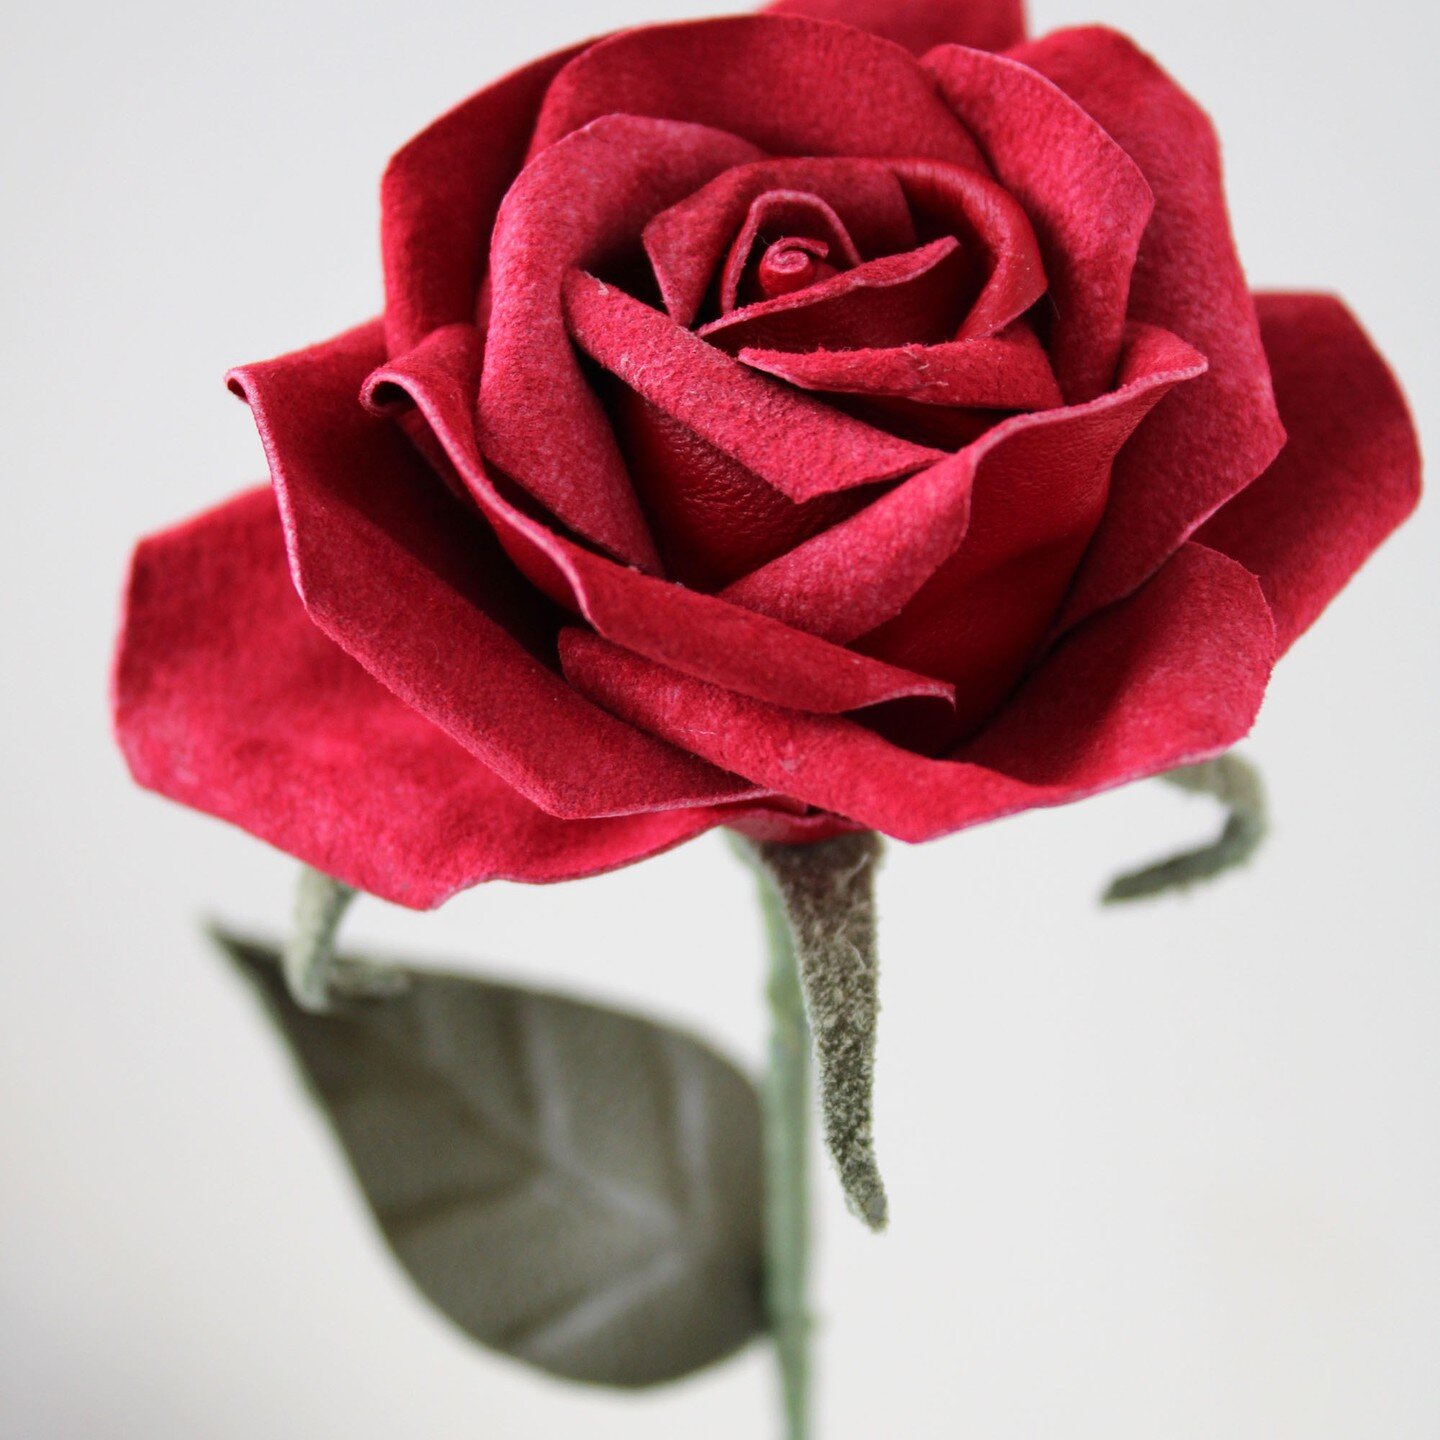 Happy Valentine's Day

#happyvalentinesday #redroses #valentine #longstemroses #flowersbypost #valentinesday #myvalentine #ourvalentine #longstemredrose #leatherrose #everlastingflowers #14th #14thfeb #love #engagement #romance #romanticrose